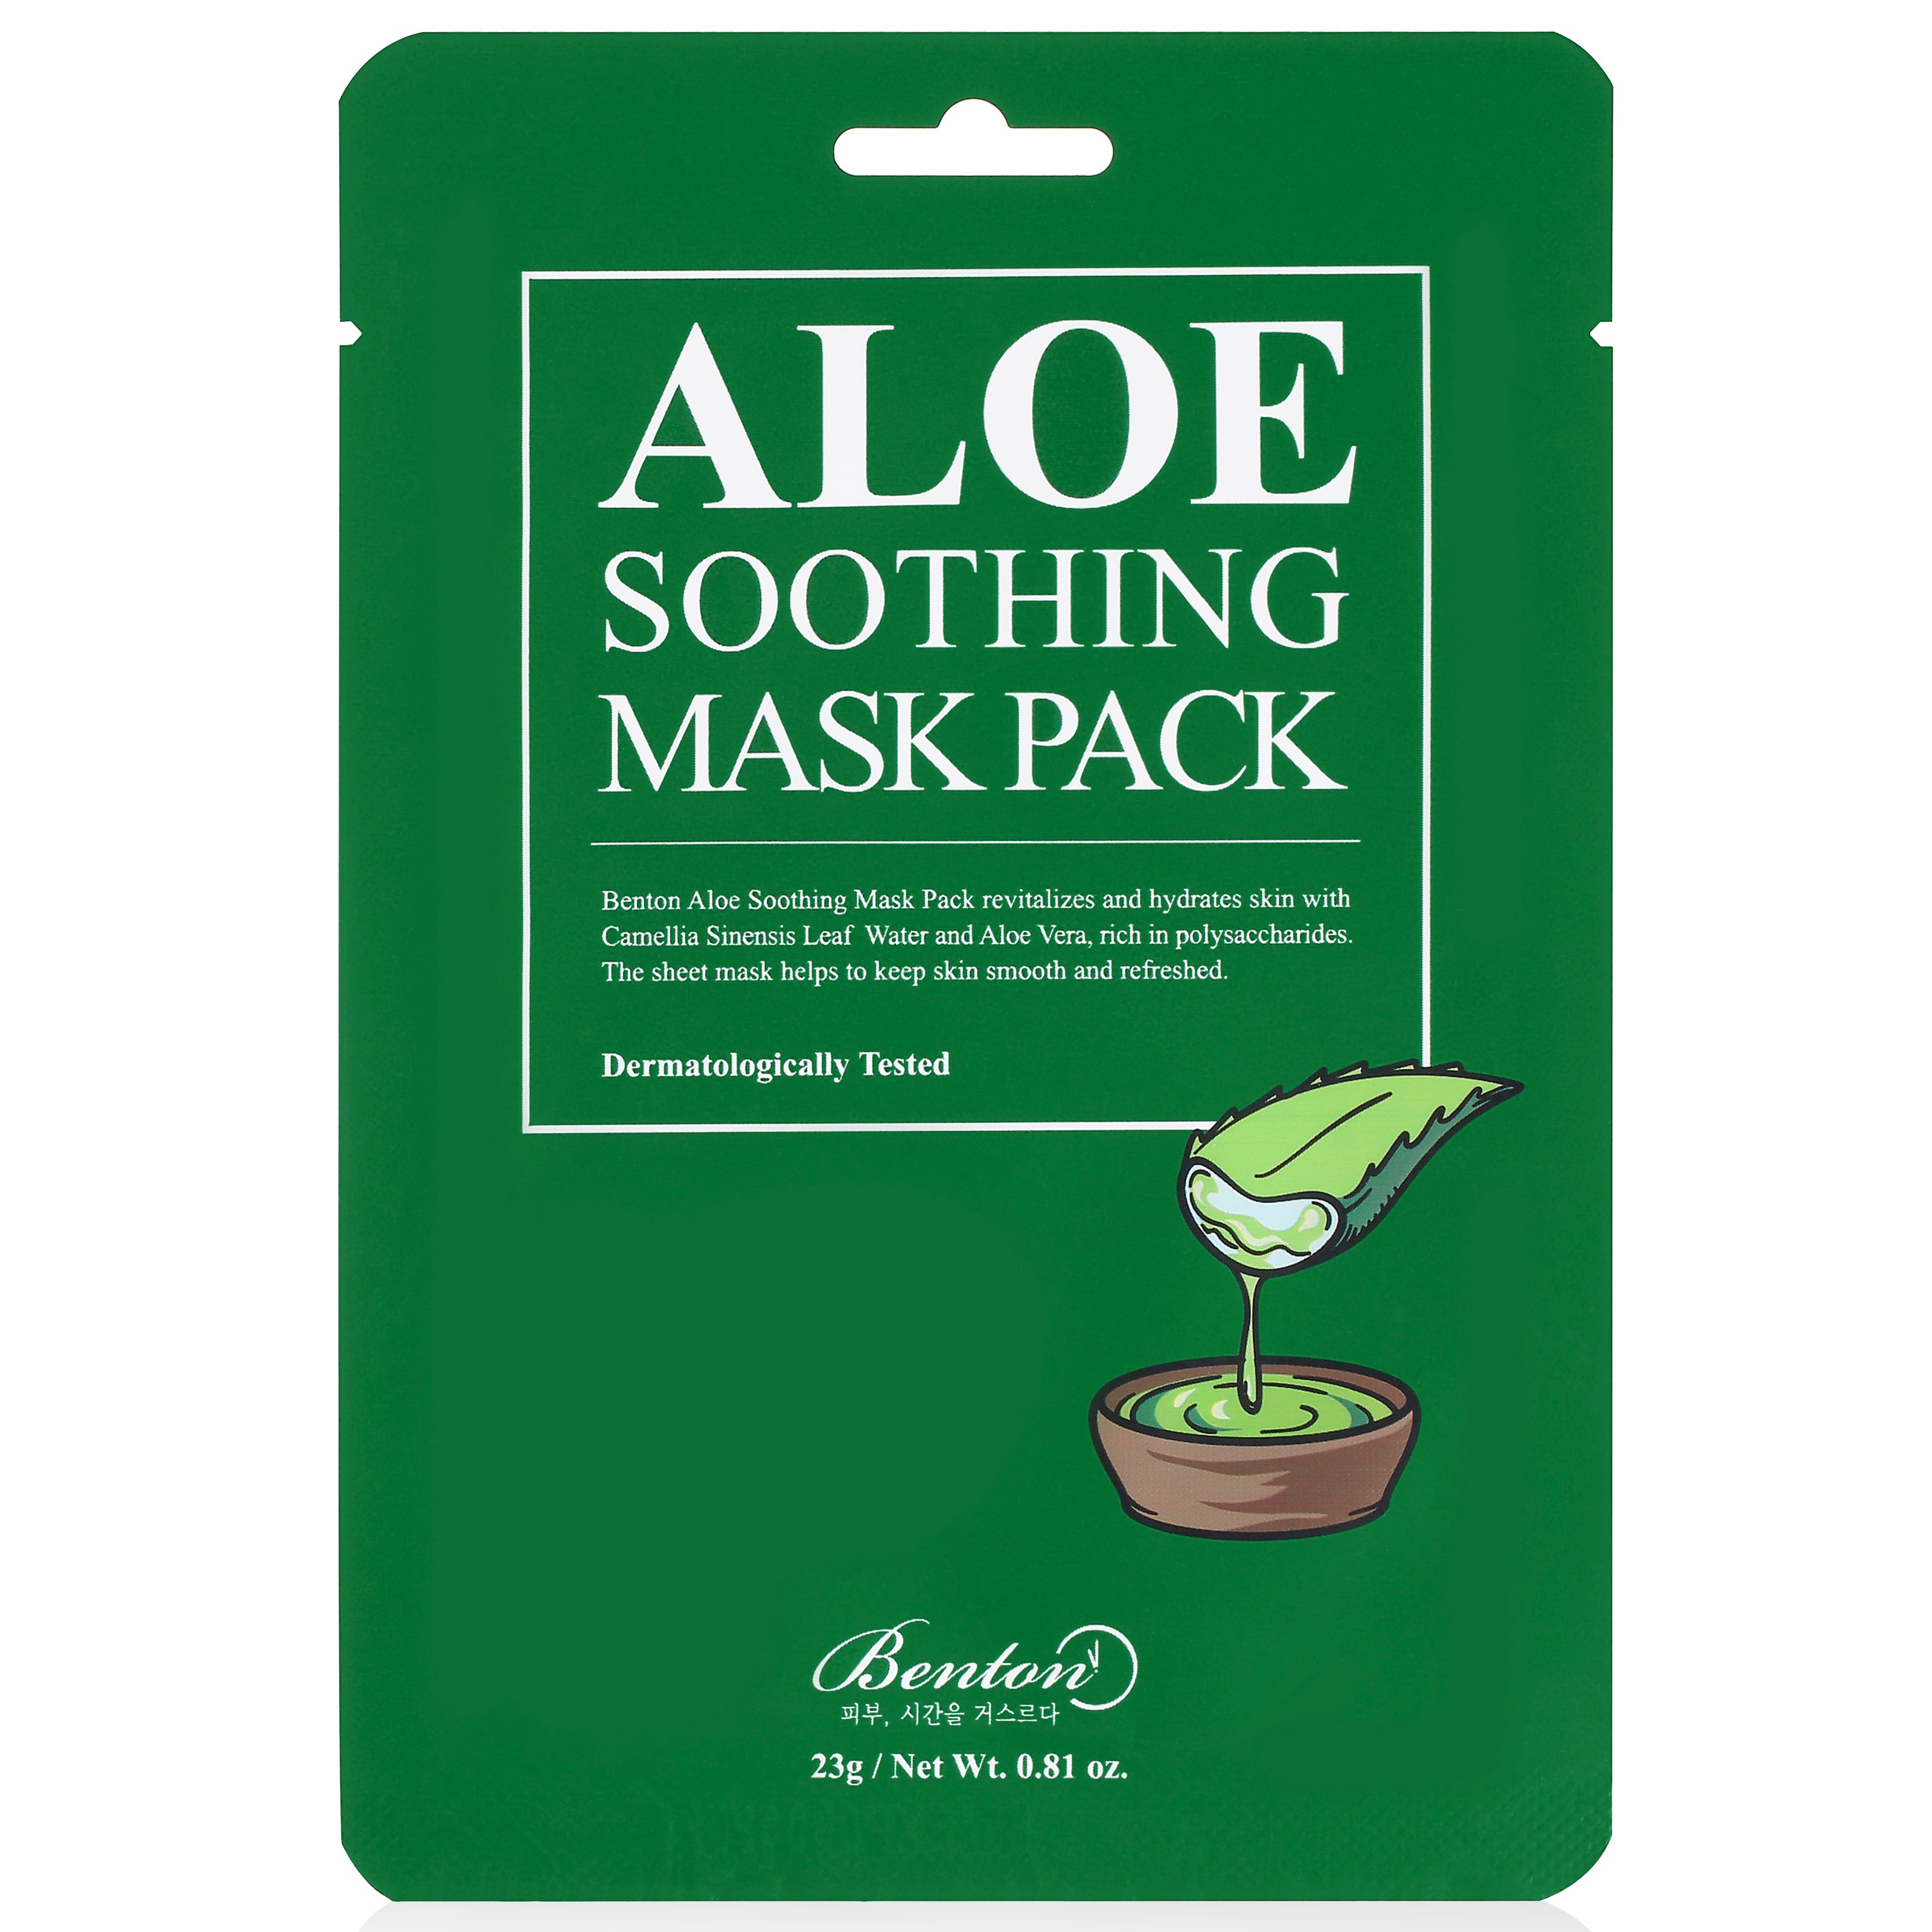 Benton Aloe Soothing mask pack